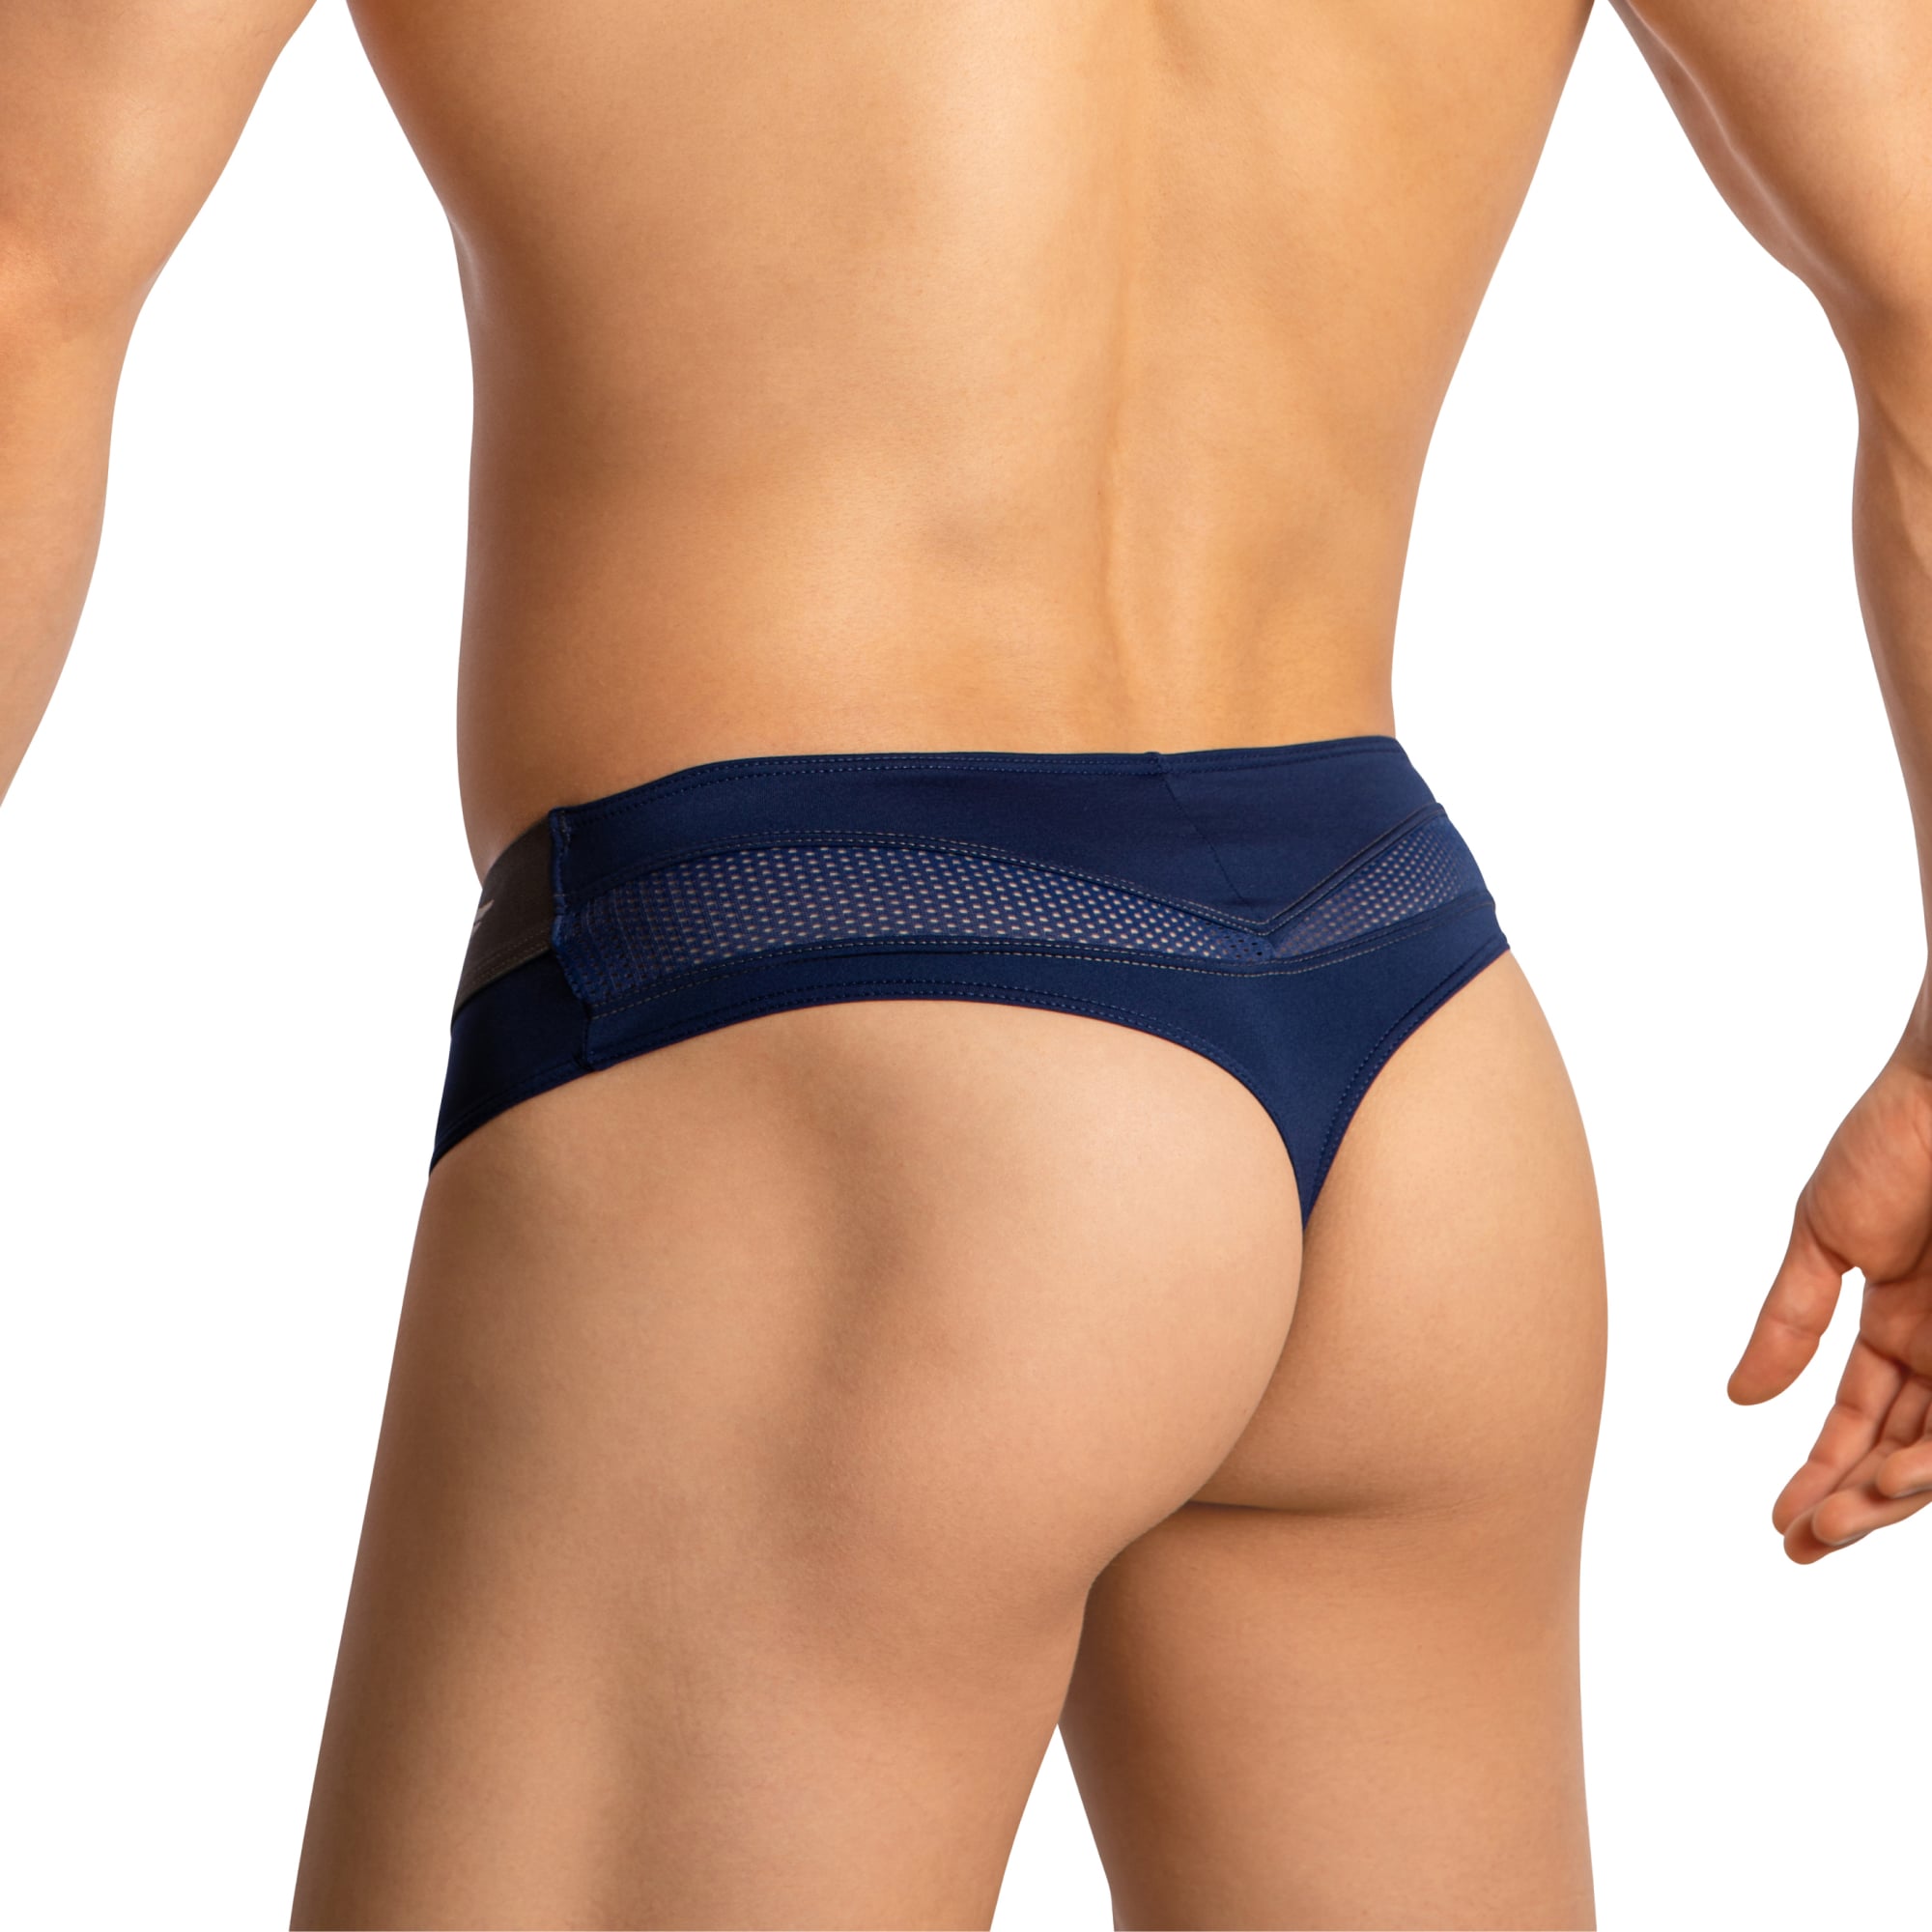 Agacio Thongs for Guys Sports Underwear AGK035 Sexy Men's Underwear